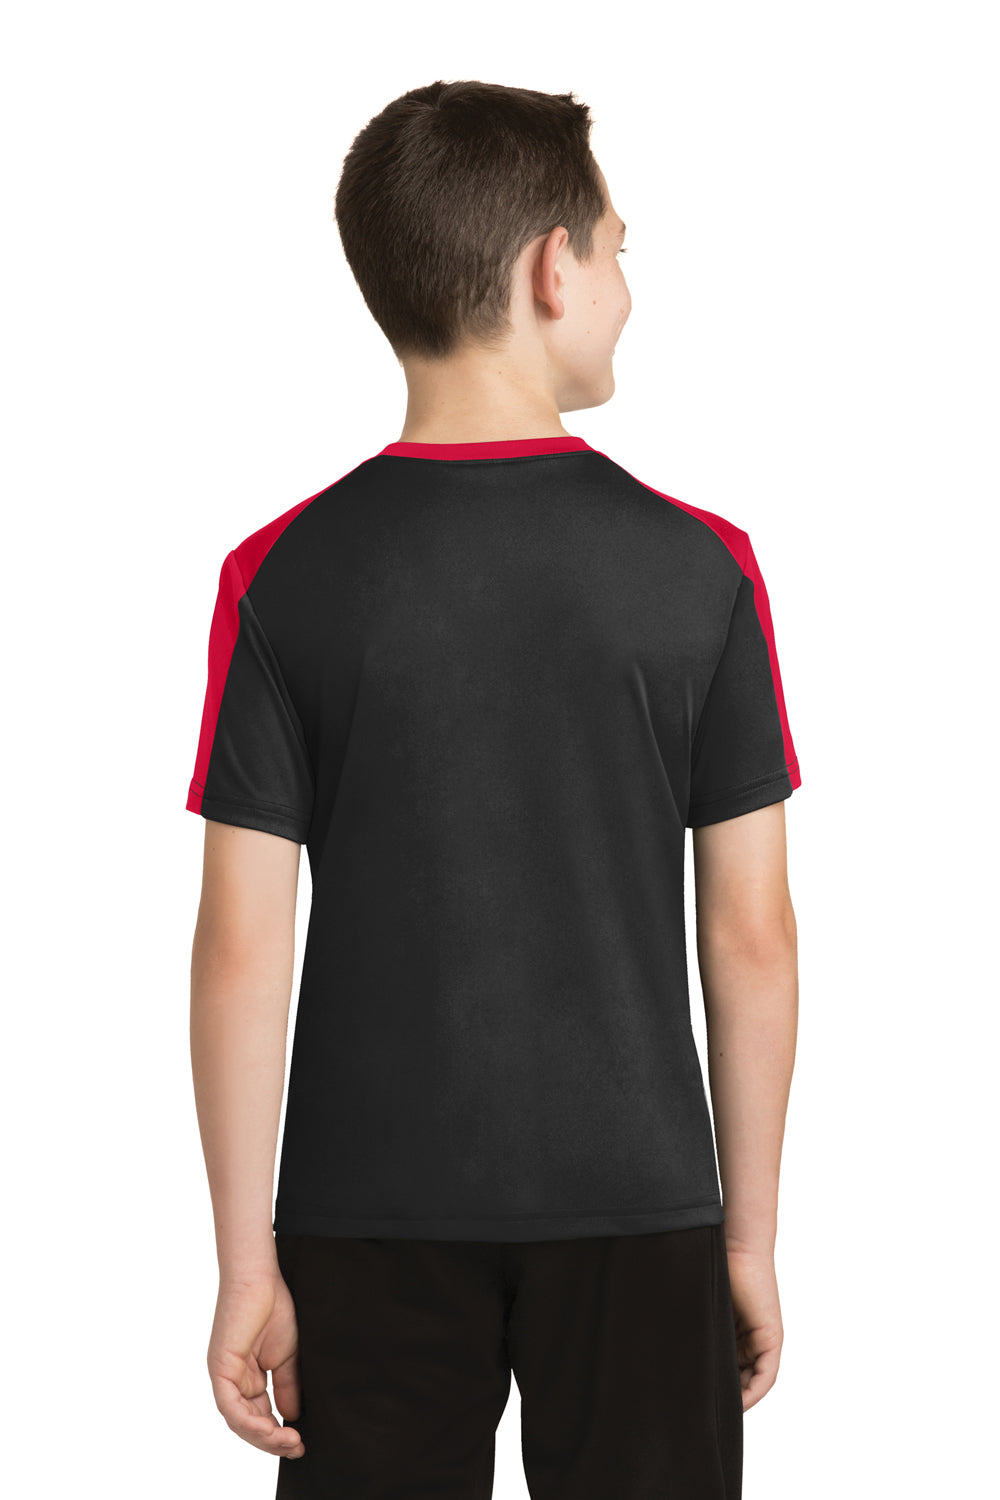 Sport-Tek YST354 Youth Competitor Moisture Wicking Short Sleeve Crewneck T-Shirt Black/Red Back